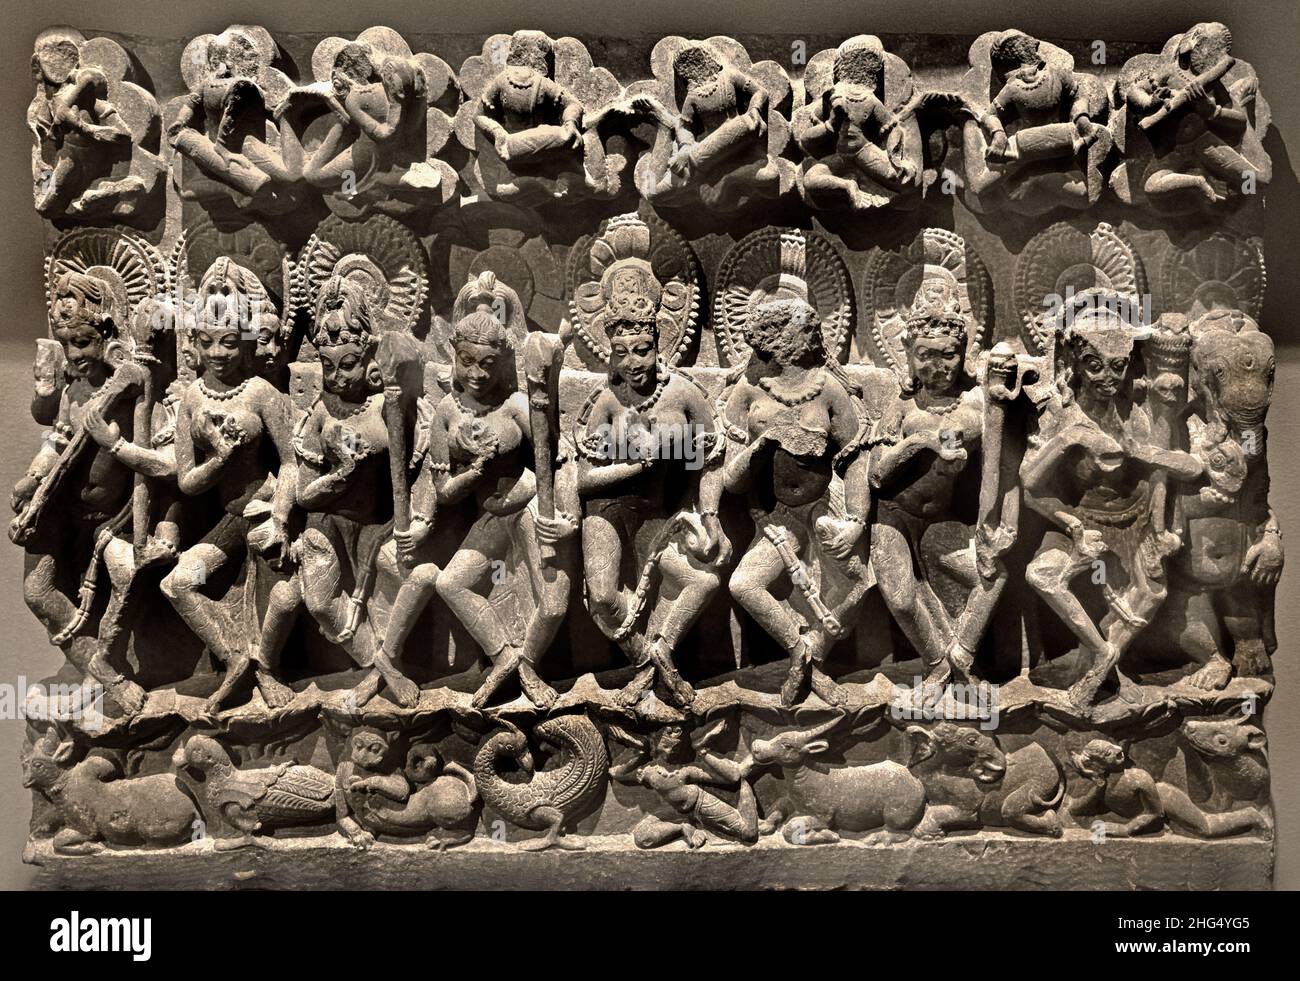 DANCING SAPTAMATRIKA 11th Century ad Nord India Centrale 43 x 66 cm arenaria. Pannello, architrave della porta d'ingresso di un tempio, presenta il gruppo di saptamatrika Brahmani, Saptamatrika - la sette Divina Madre con Vinadhara e Ganesha - Maheshvari, Kaumari, Vaishnavi, Varahi, Indrani e Camunda) accompagnato da Vinadhara, ipostasi di Shiva e Ganesha. Foto Stock